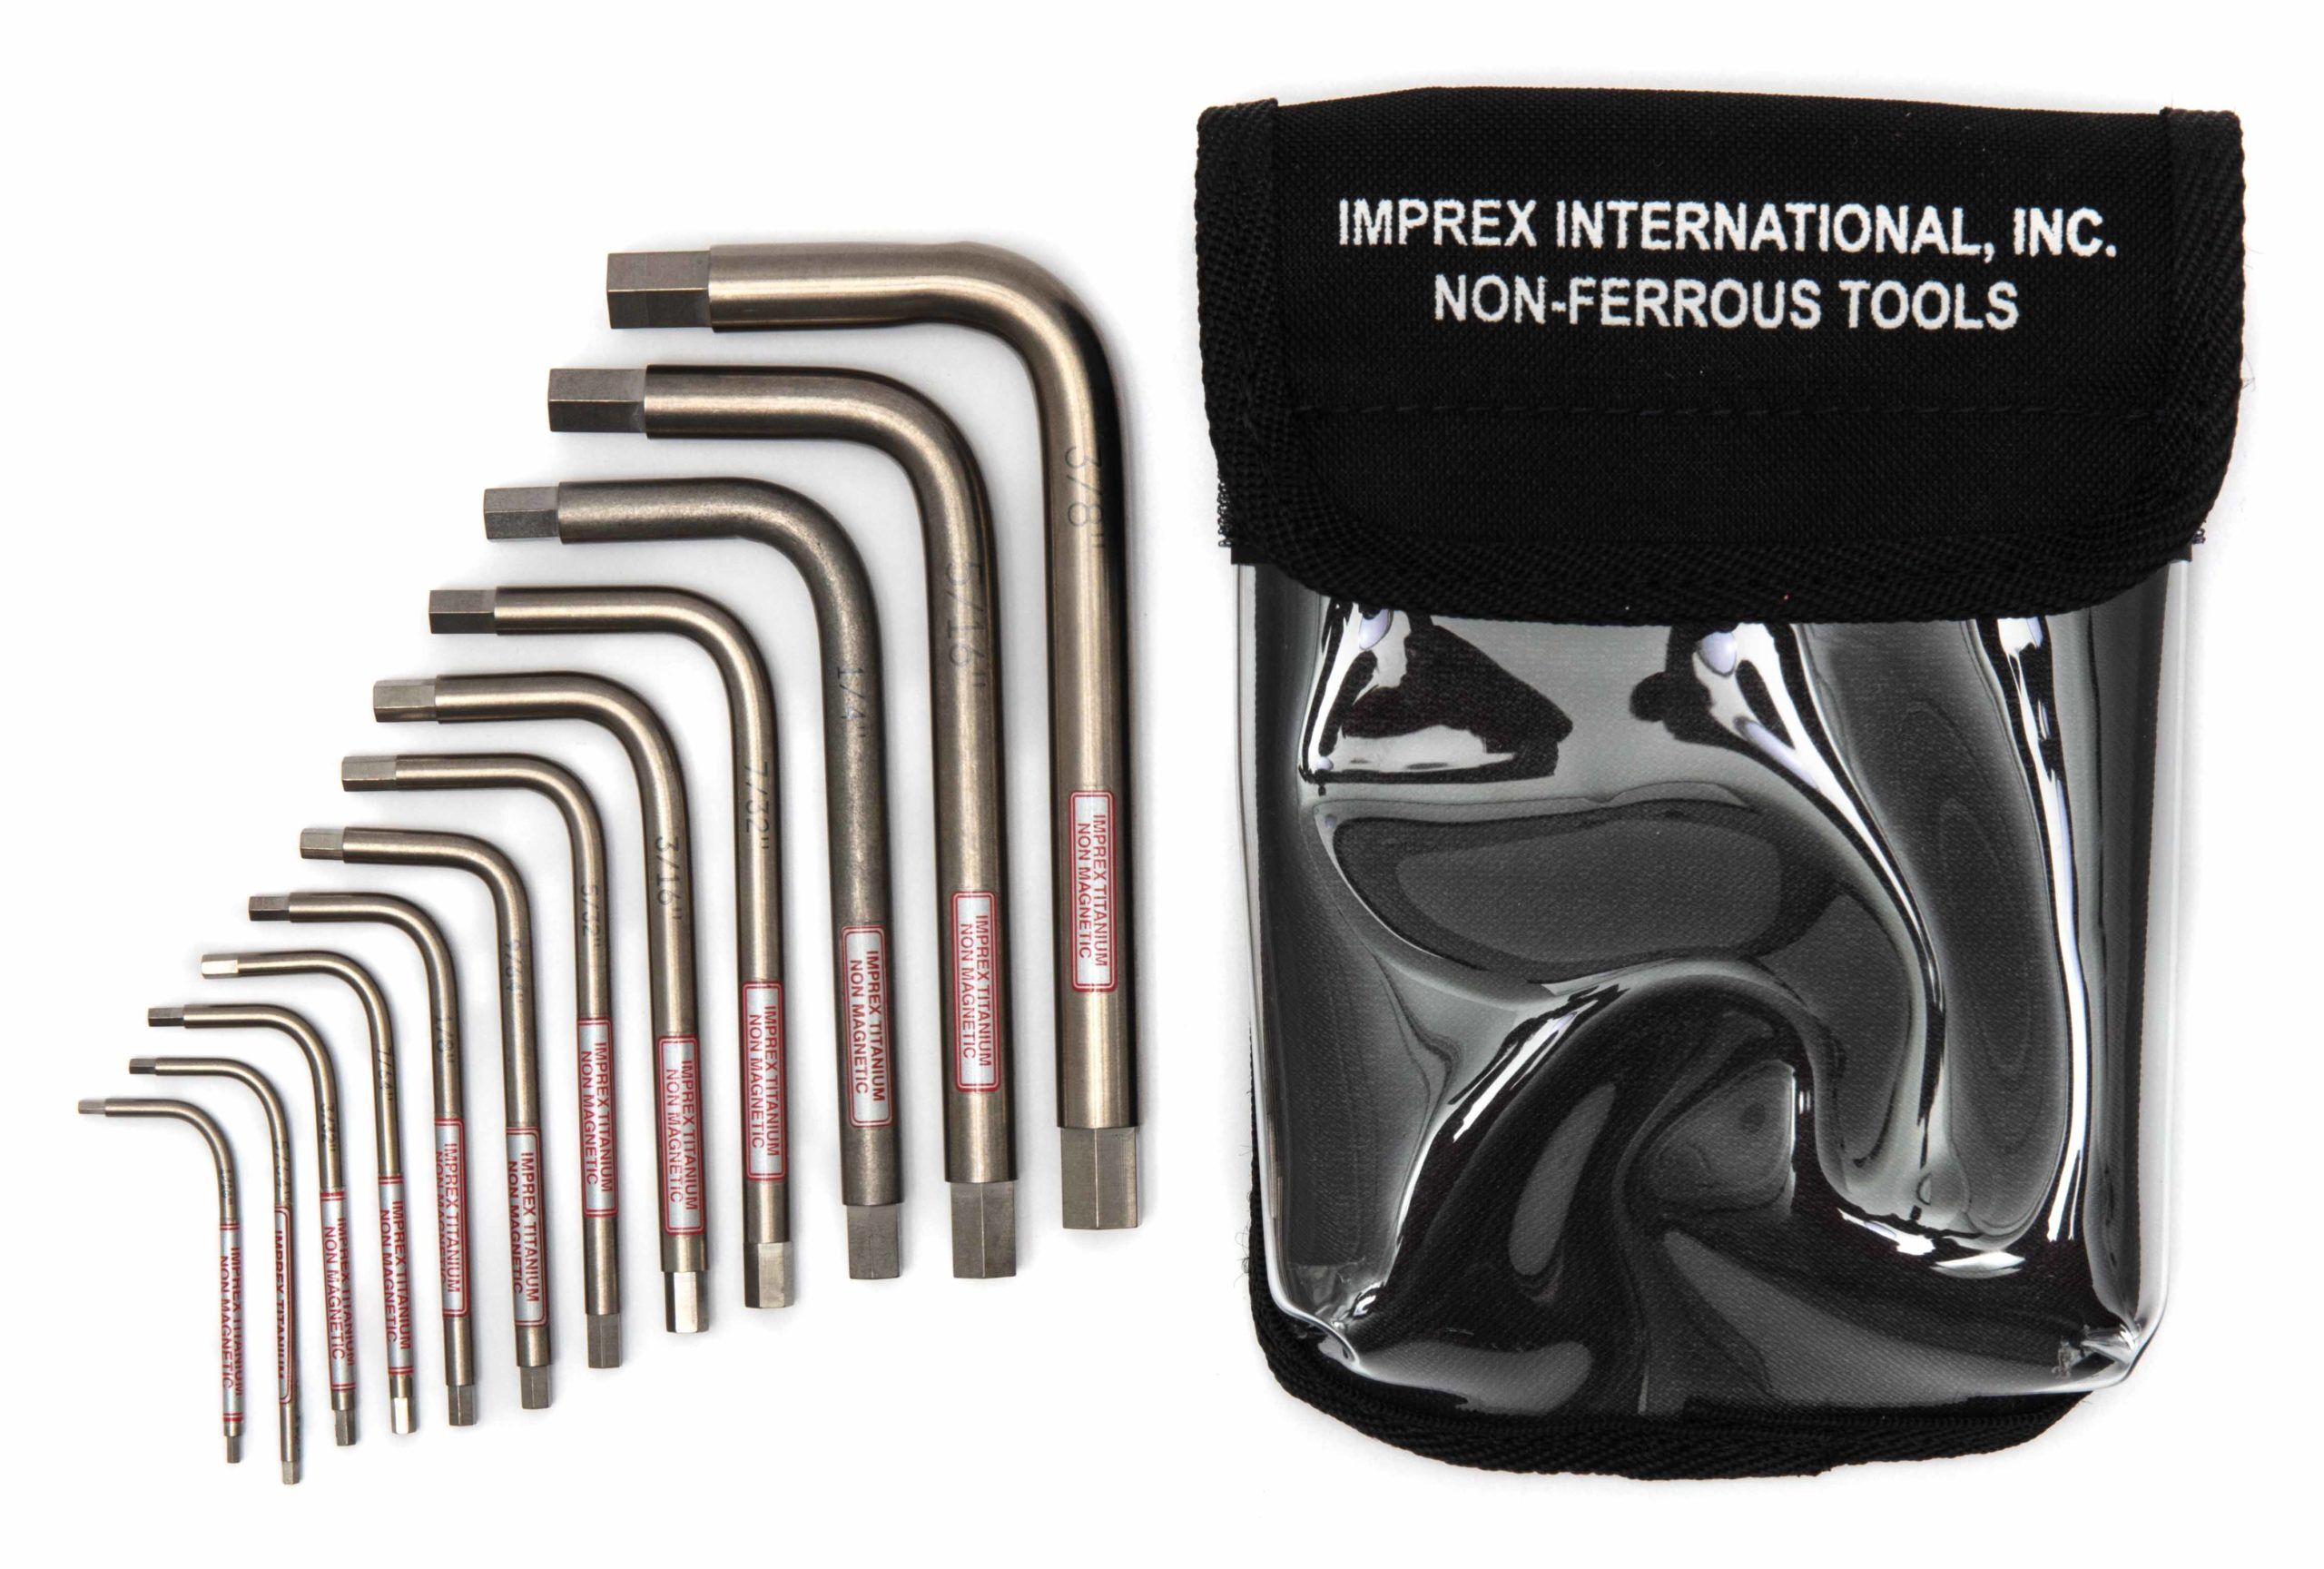 Ed Mappe detekterbare Titanium non-magnetic imperial (inch) hex (Allen) key kit small version -  Imprex International, Inc.